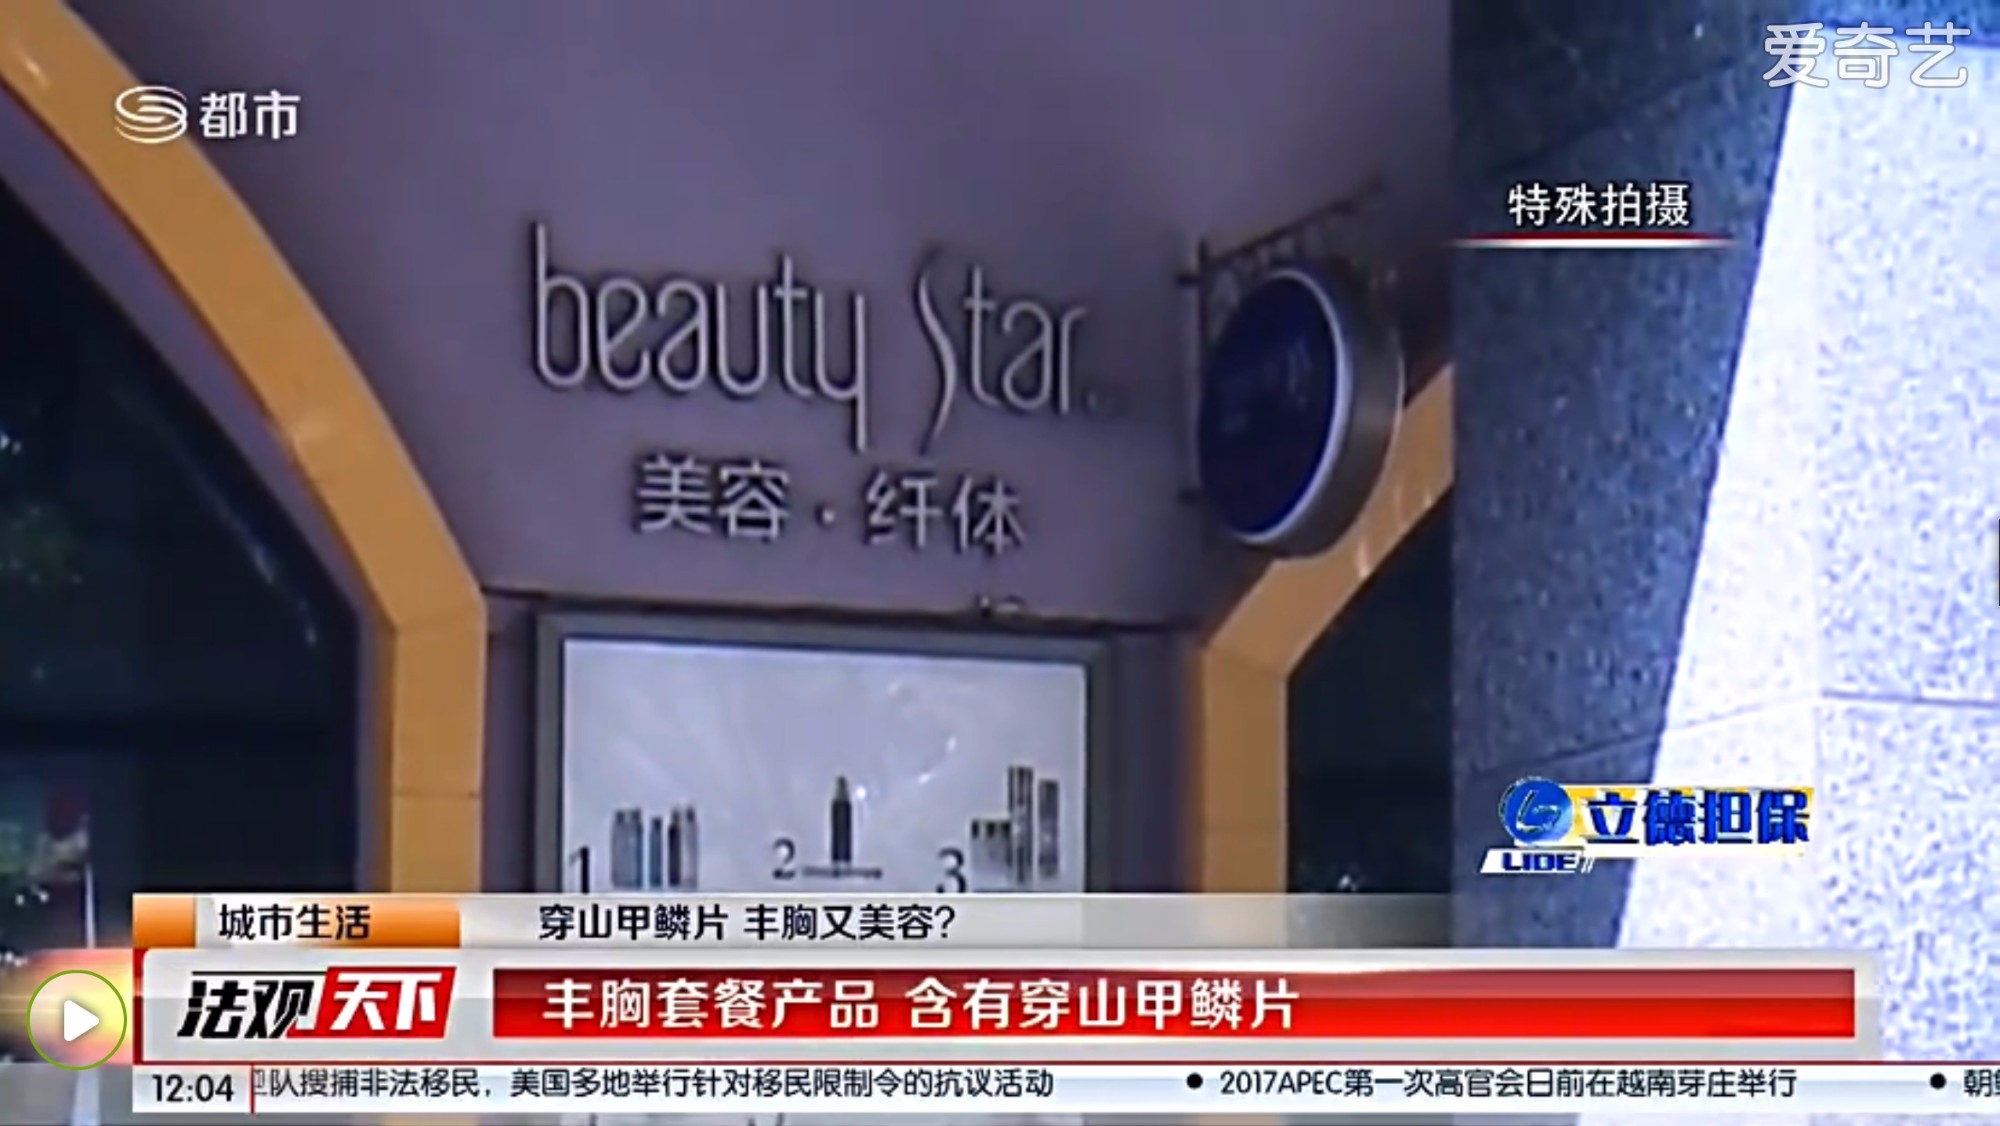 pangolin scale treatment beauty salon beauty star shenzhen